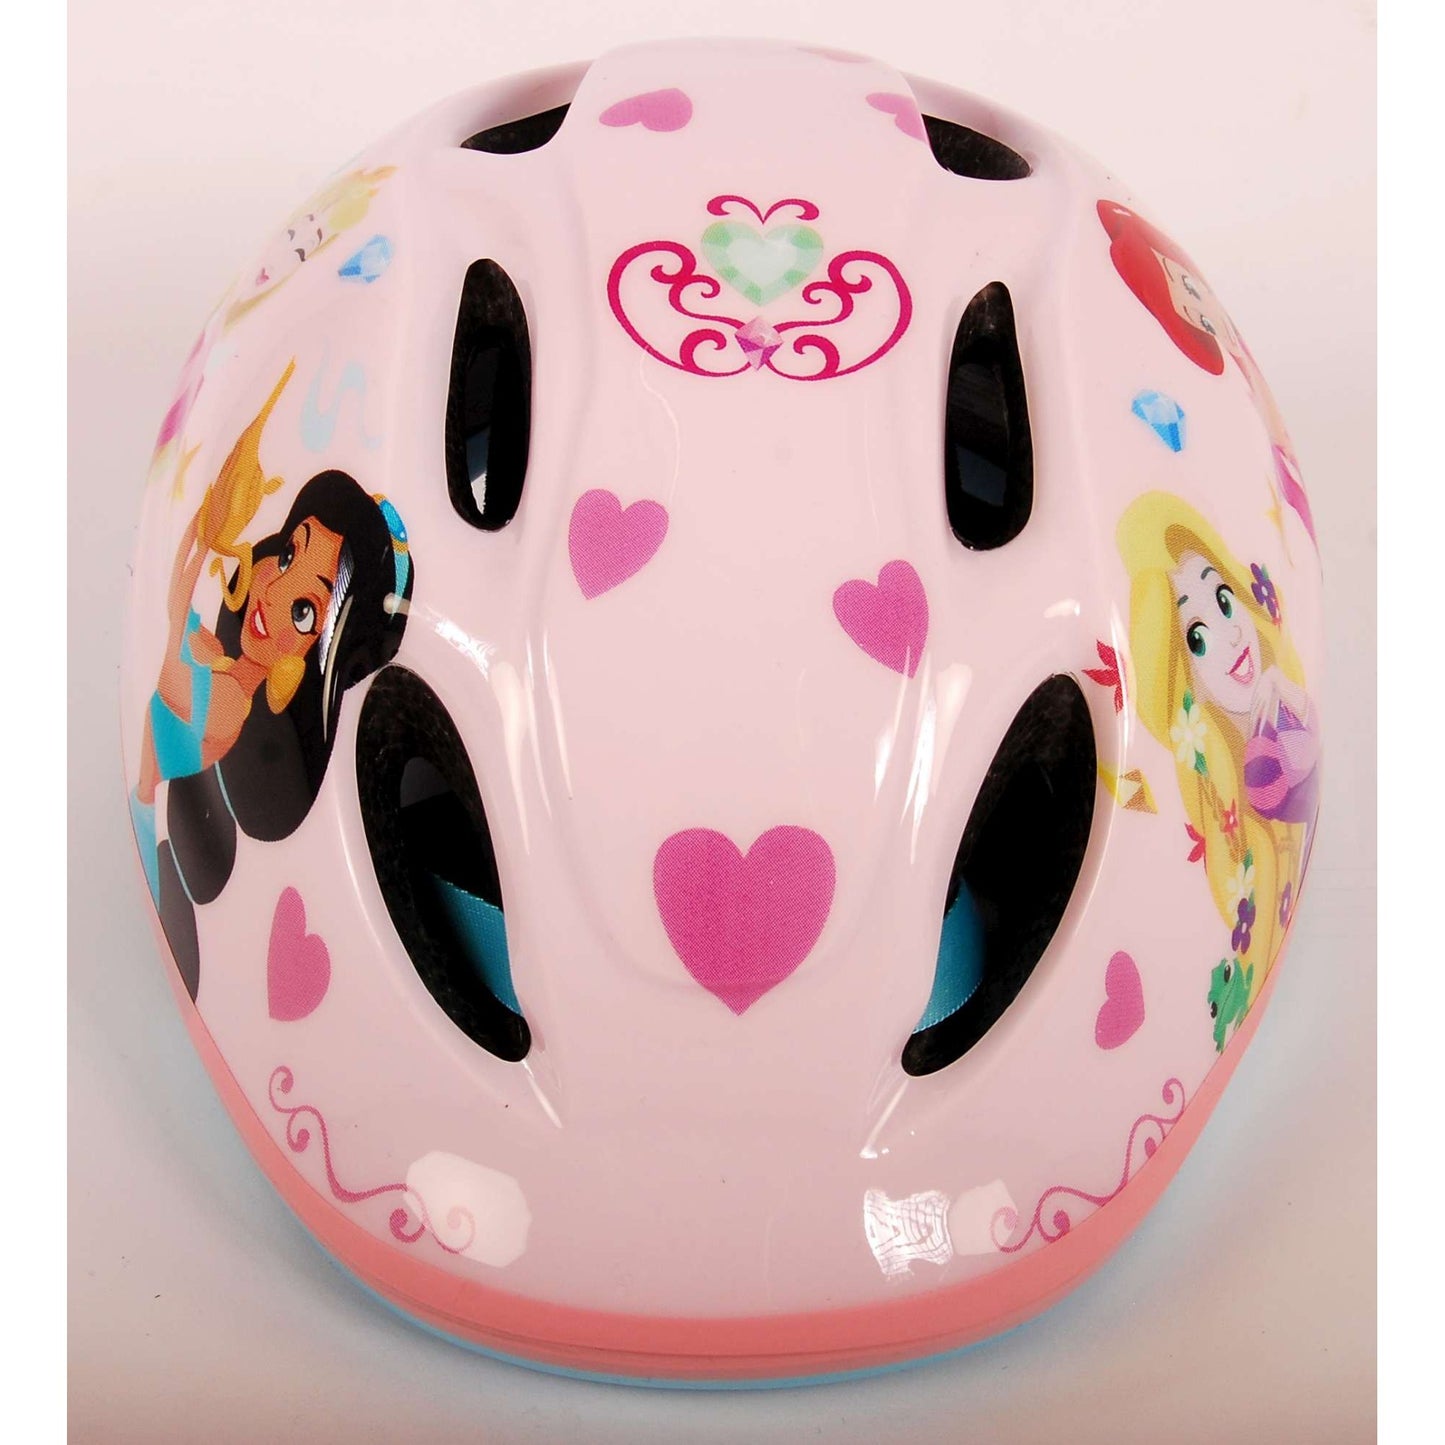 Helmet Princess 51-55 cm per bambini